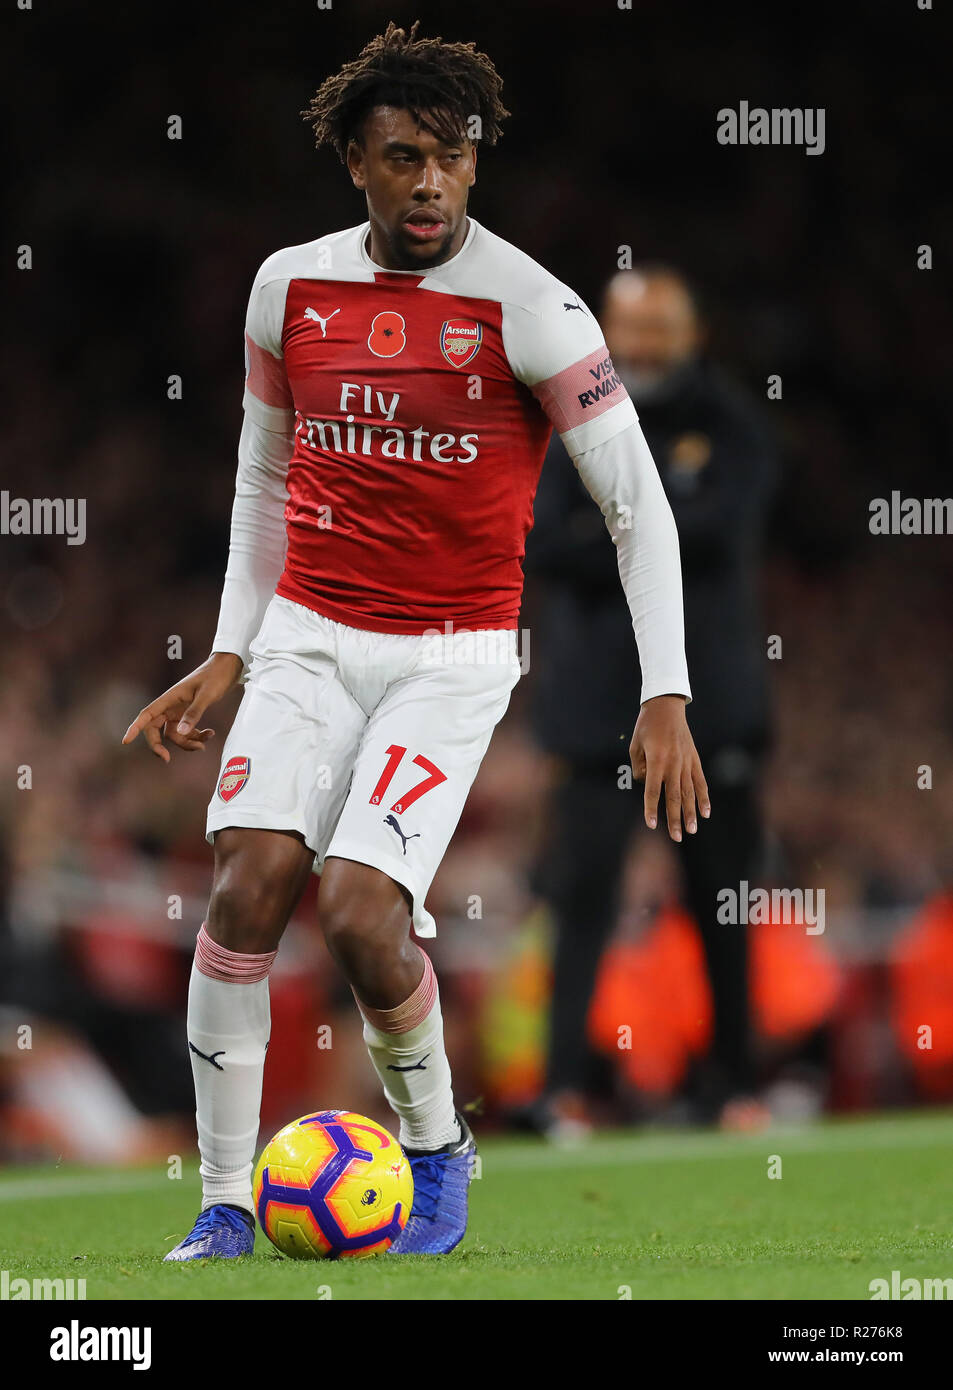 Alex Iwobi of Arsenal - Arsenal v Wolverhampton Wanderers, Premier League, Emirates Stadium, London (Holloway) - 11th November 2018 Stock Photo